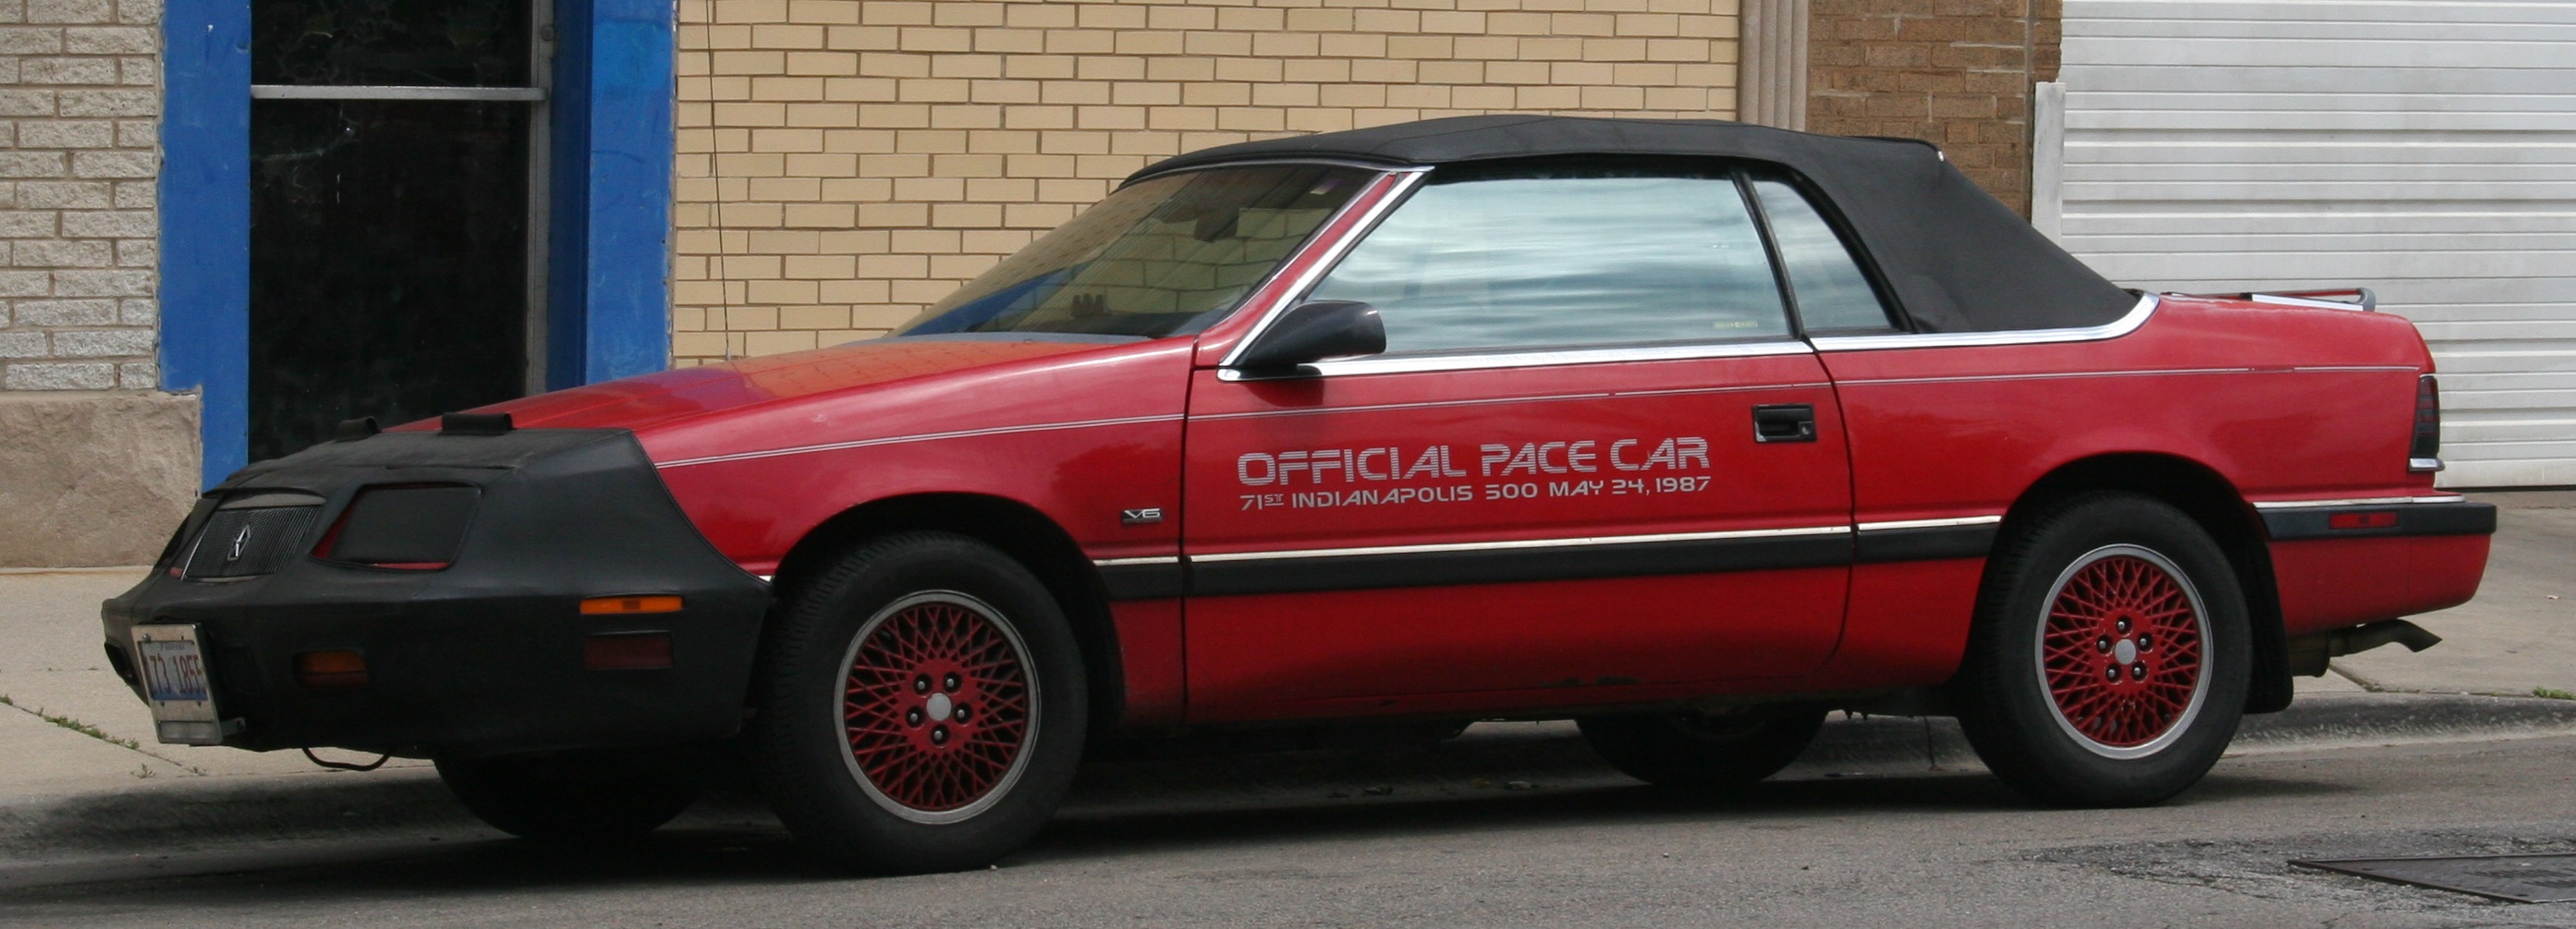 File:1985 Pontiac Fiero GT front right.jpg - Wikimedia Commons